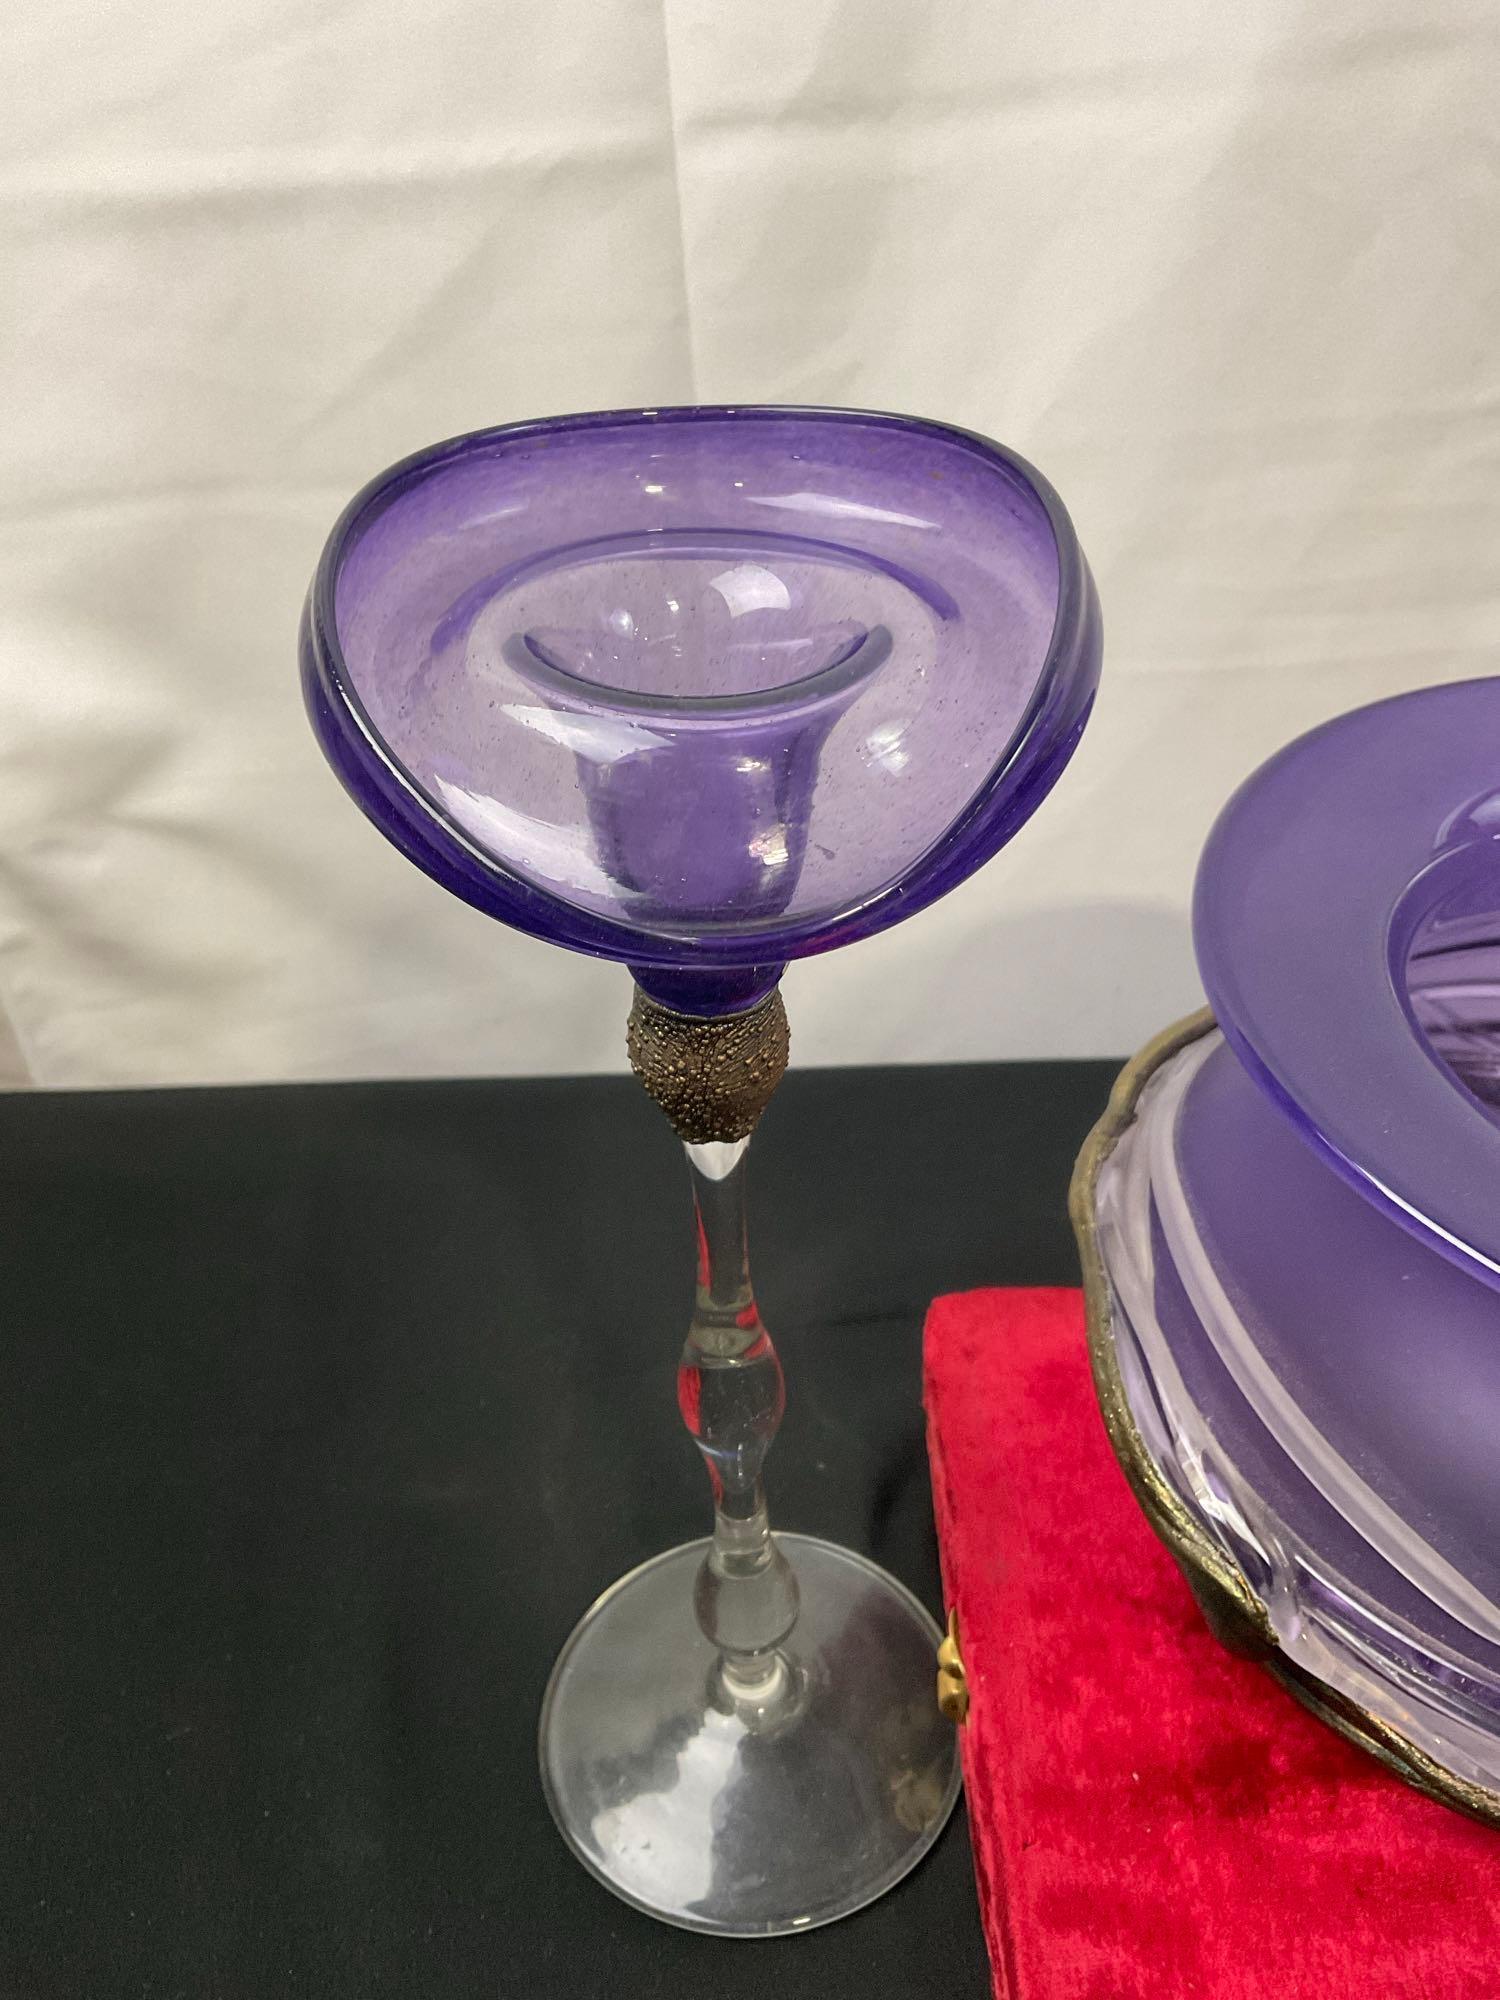 Vintage Art Glass Dishes, Stemmed Candlesticks, Large Wide Purple Glass Wrapped Jug